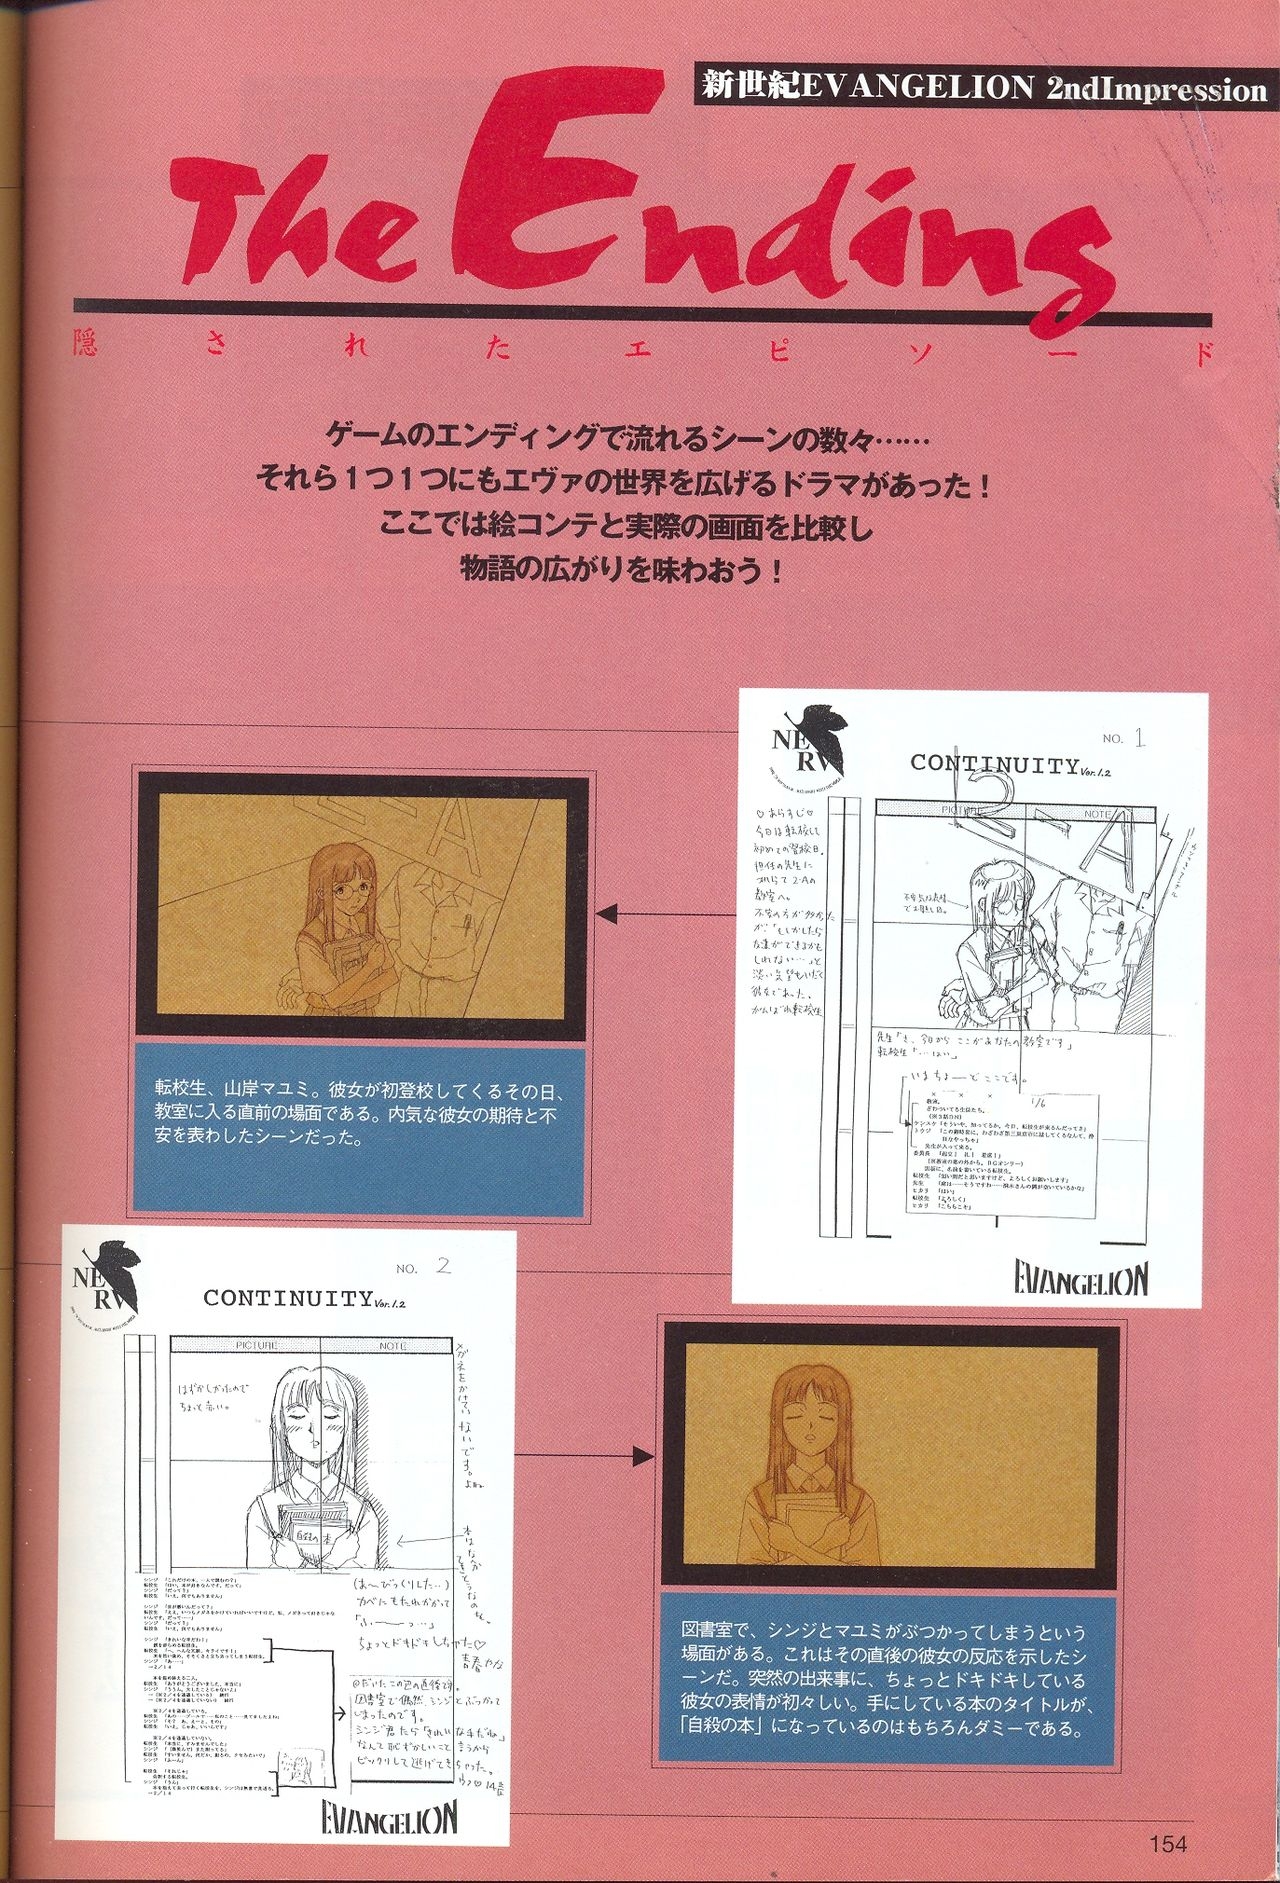 Neon Genesis Evangelion - 2nd Impression Sega Saturn Perfect Guide 153